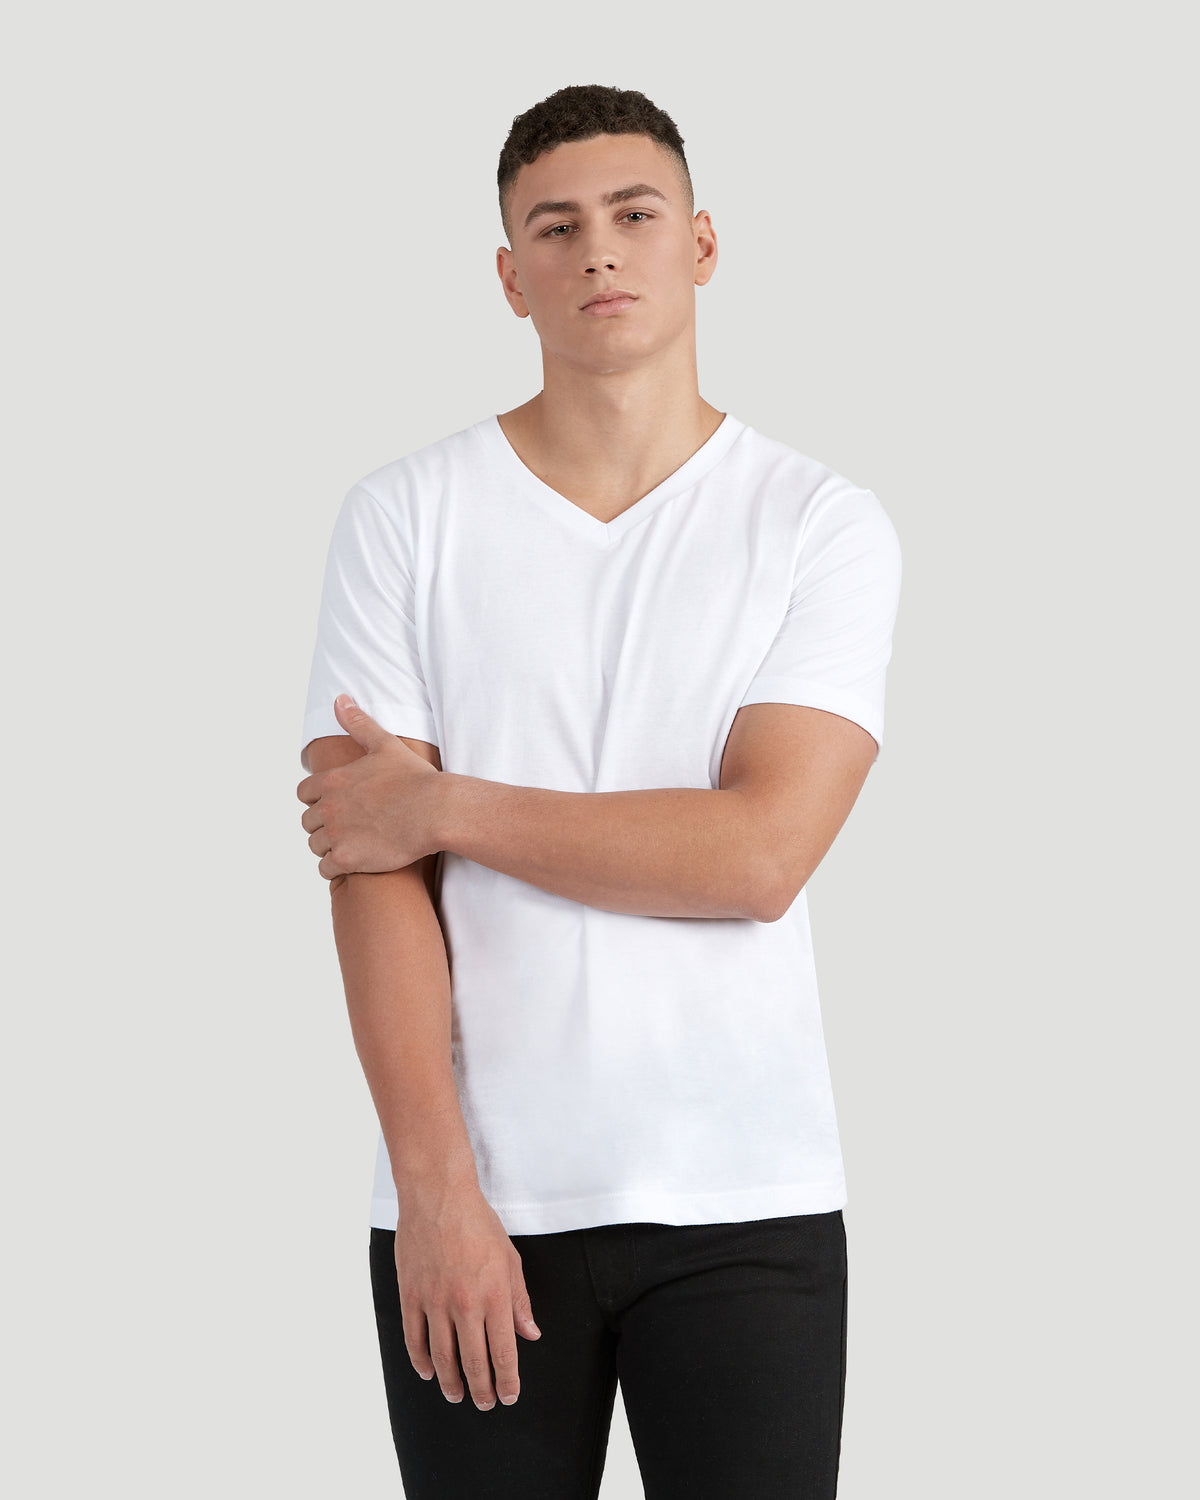 Wholesale Breathable Sweatproof T Shirt For Men Modal Seamless